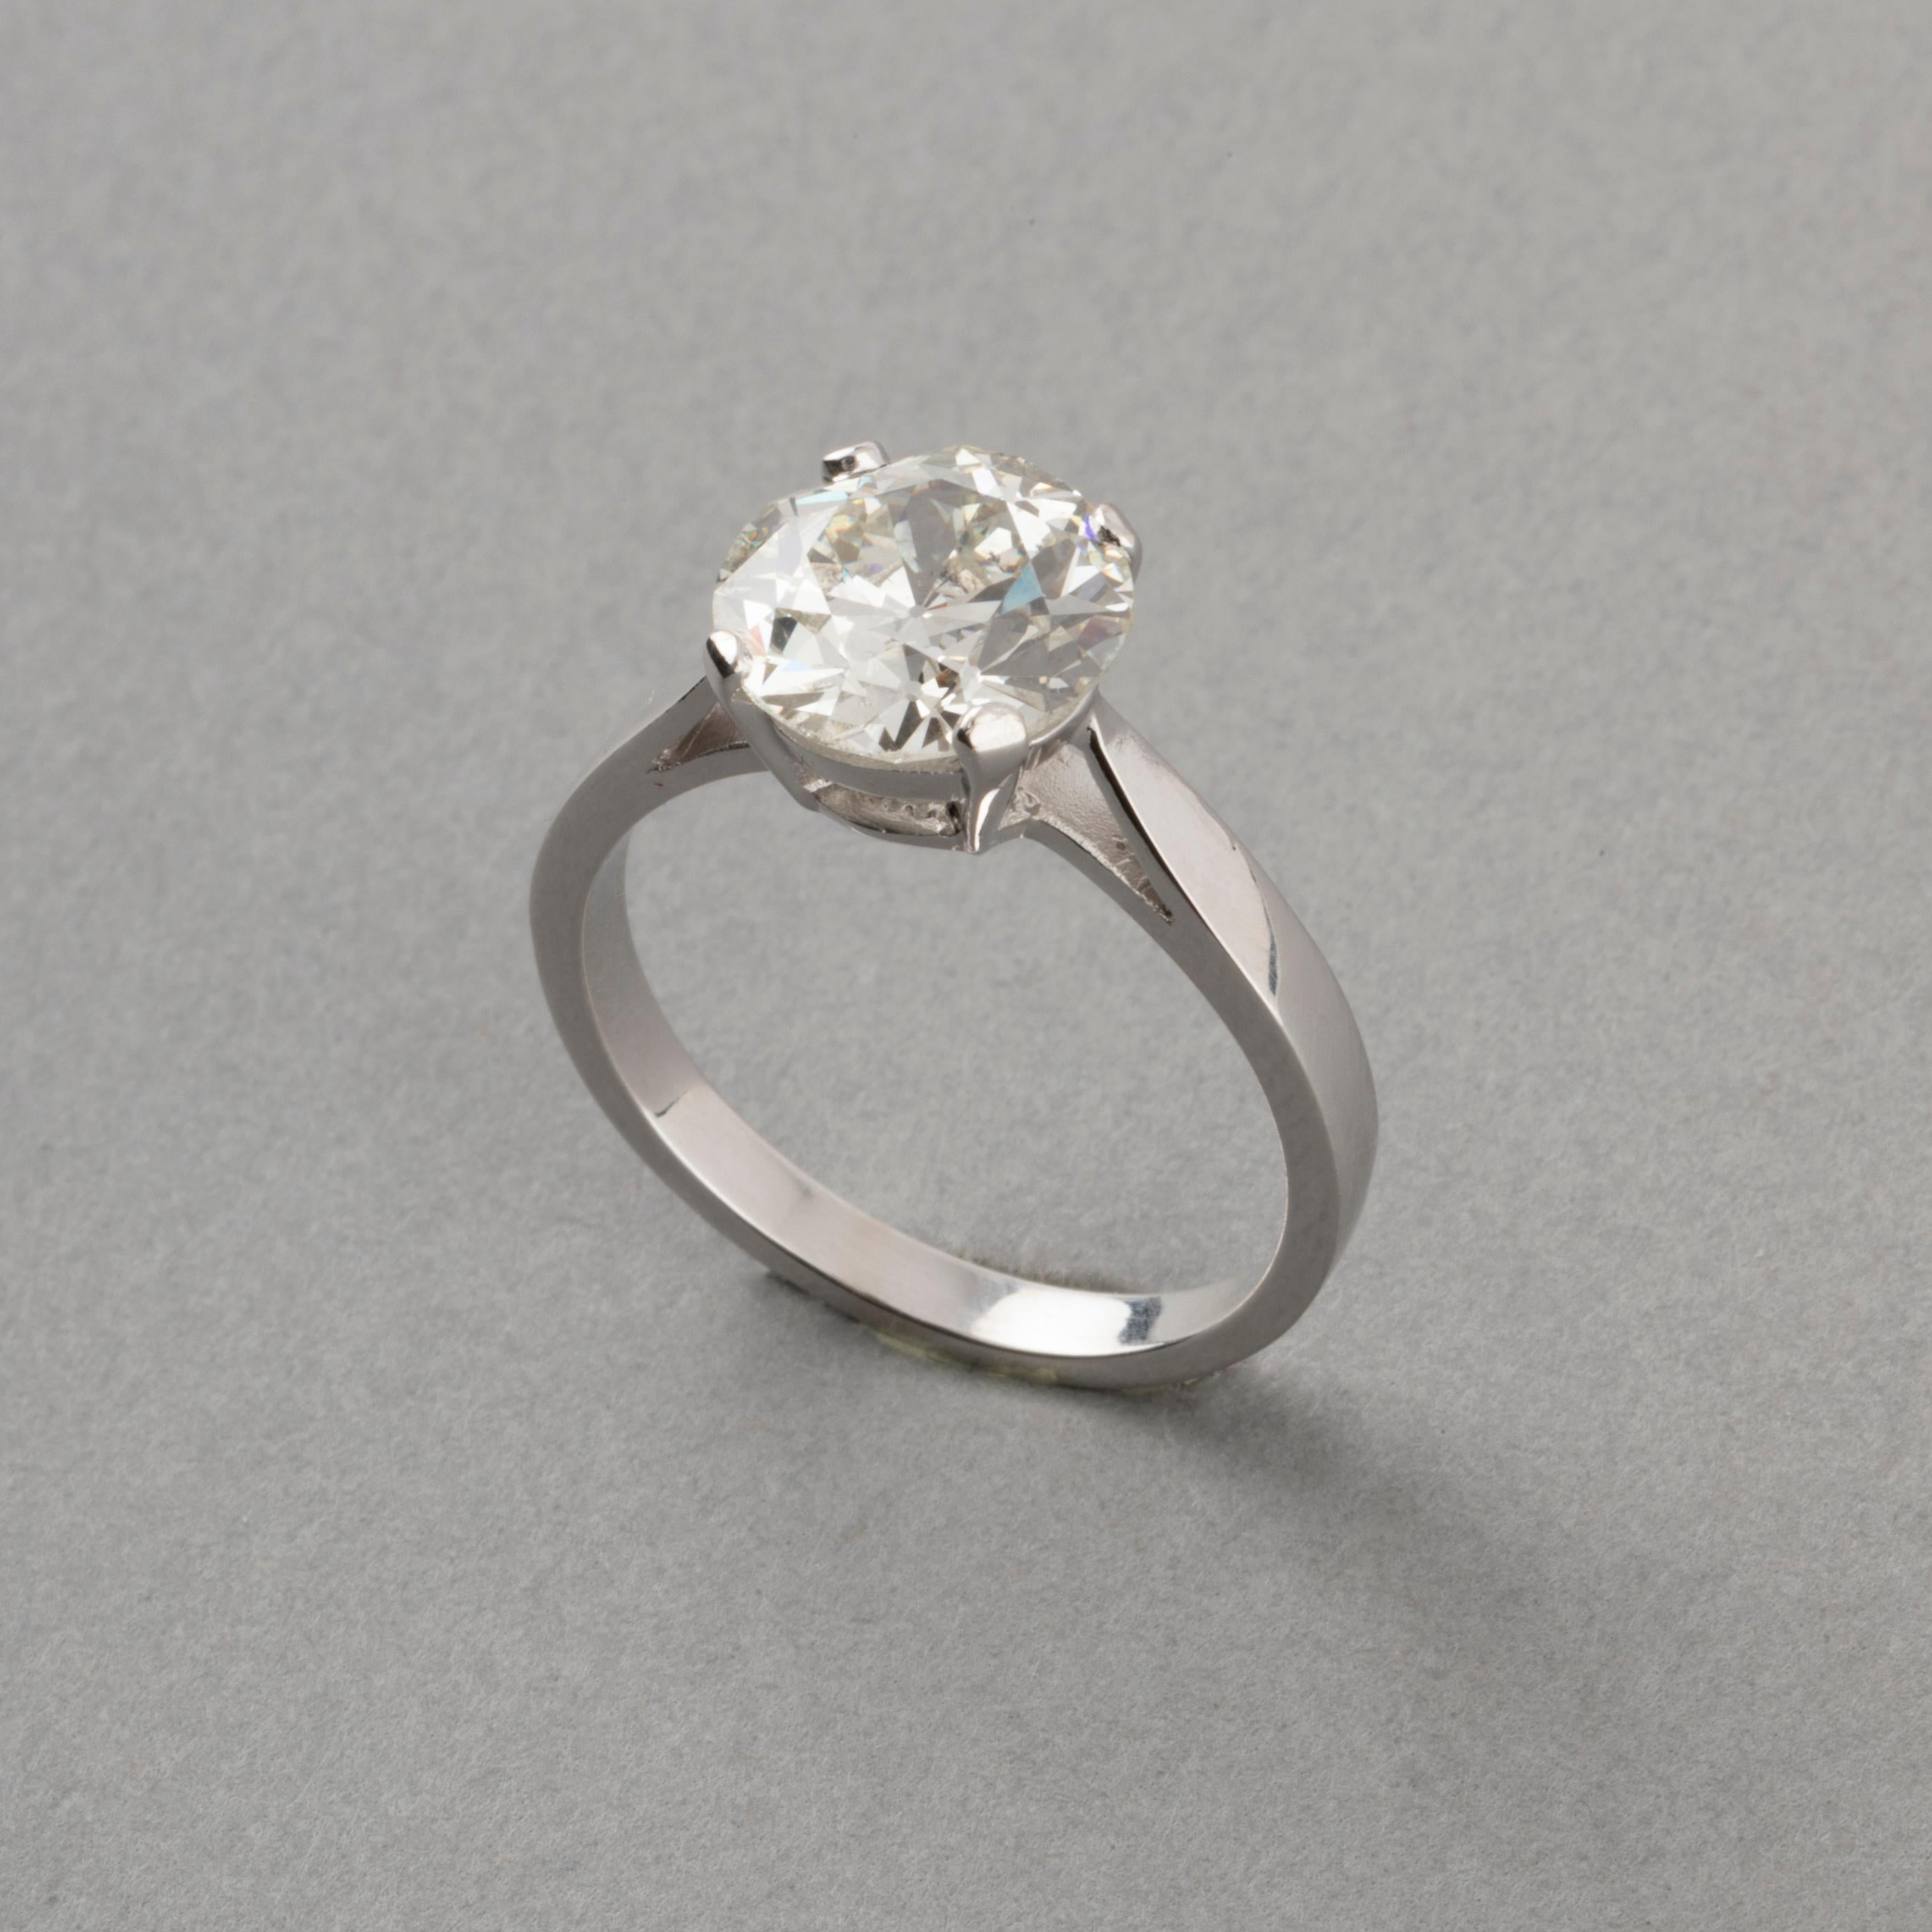 Women's Certified 2.24 Carat Diamond Solitaire Engagement Ring